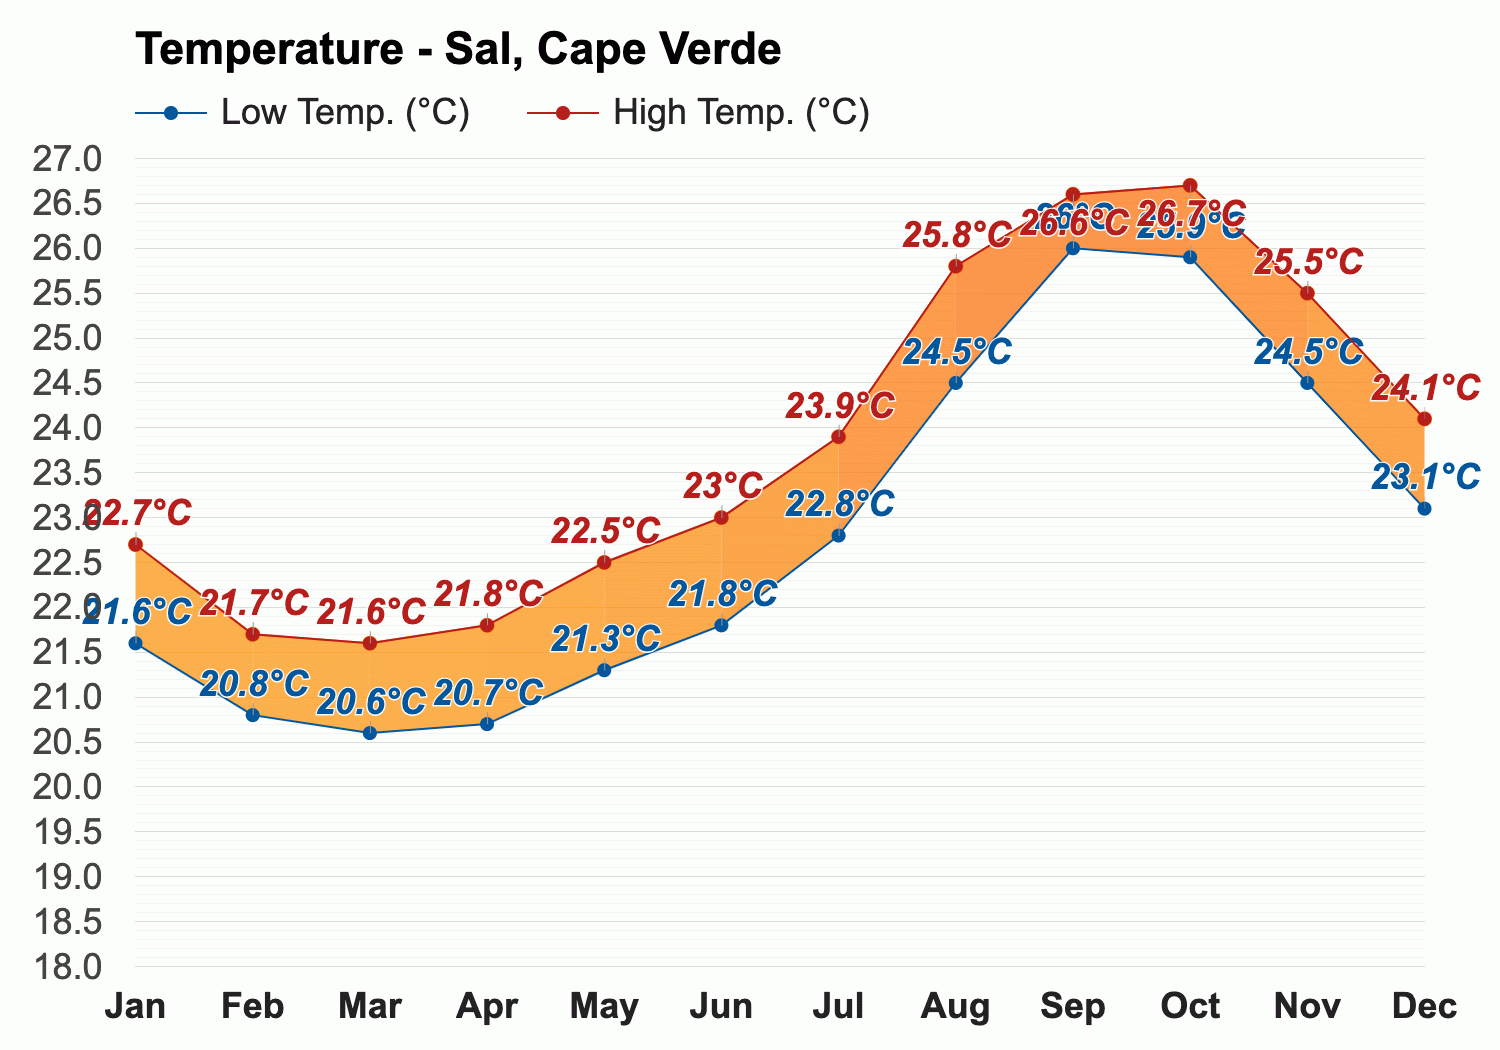 October Weather forecast - Autumn forecast - Sal, Cape Verde